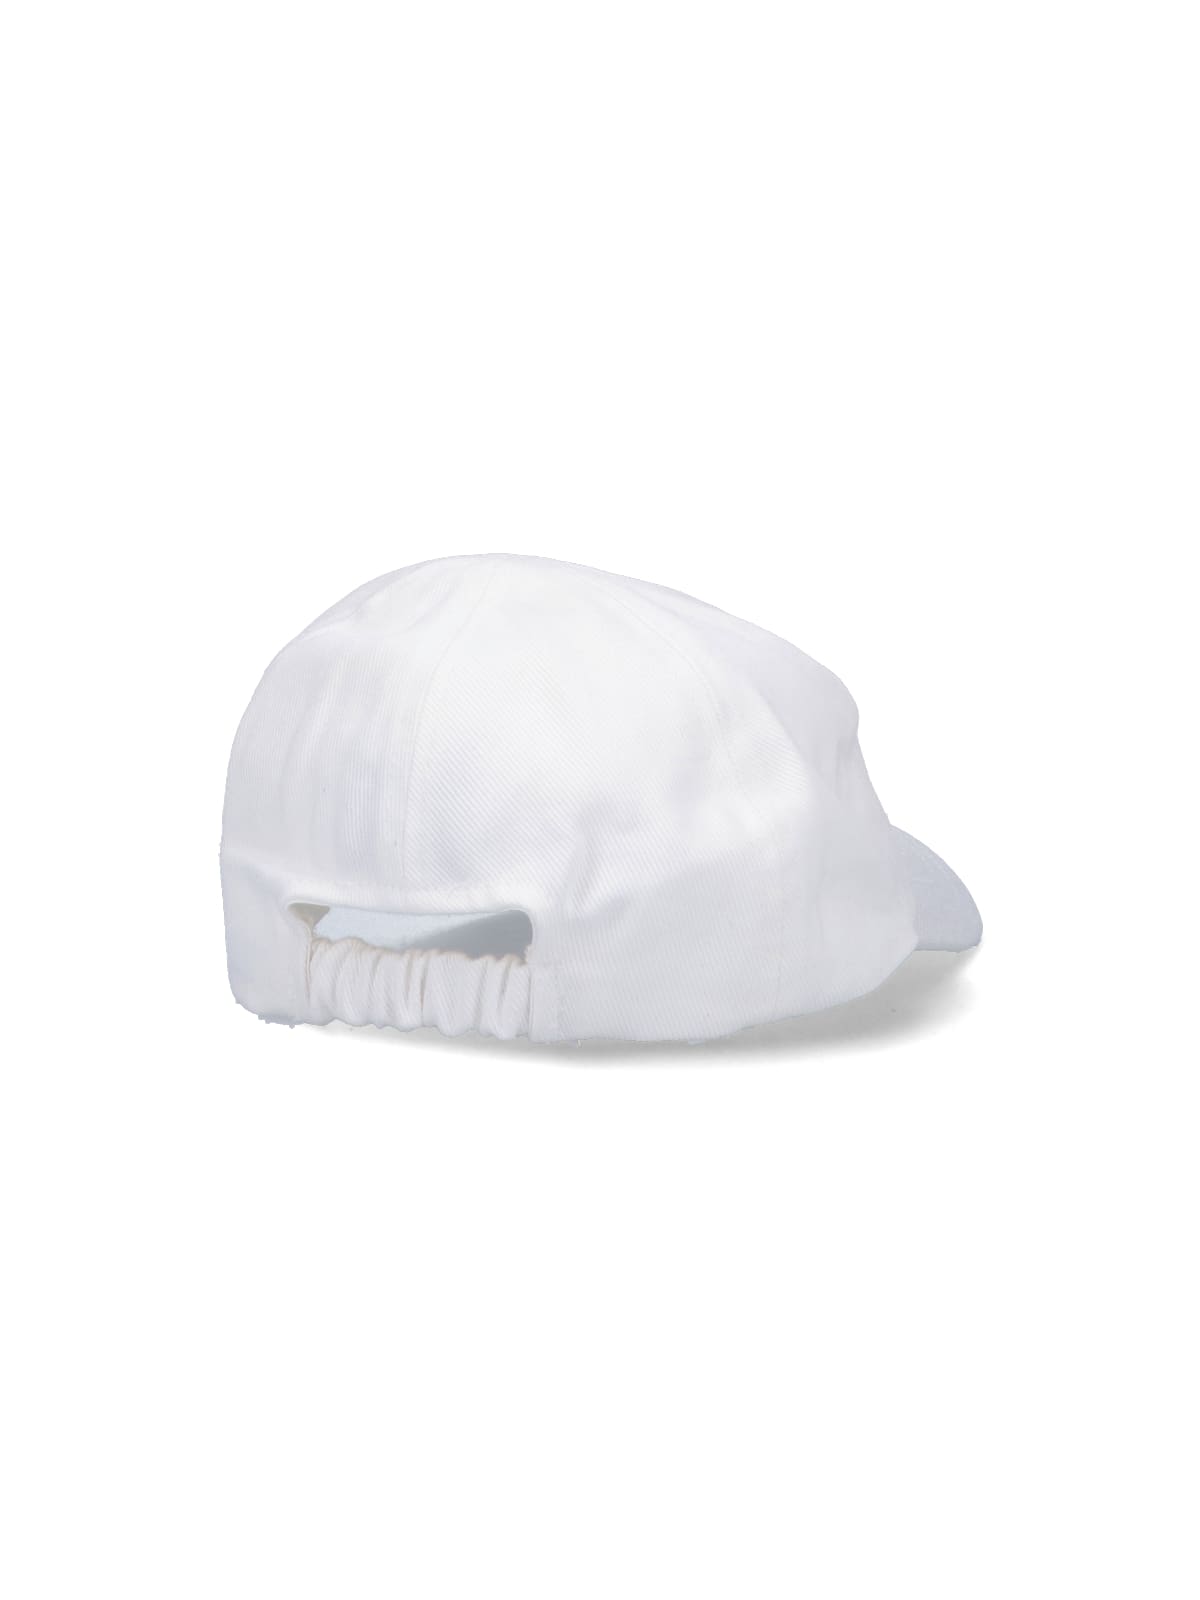 Shop Patou Hat In White